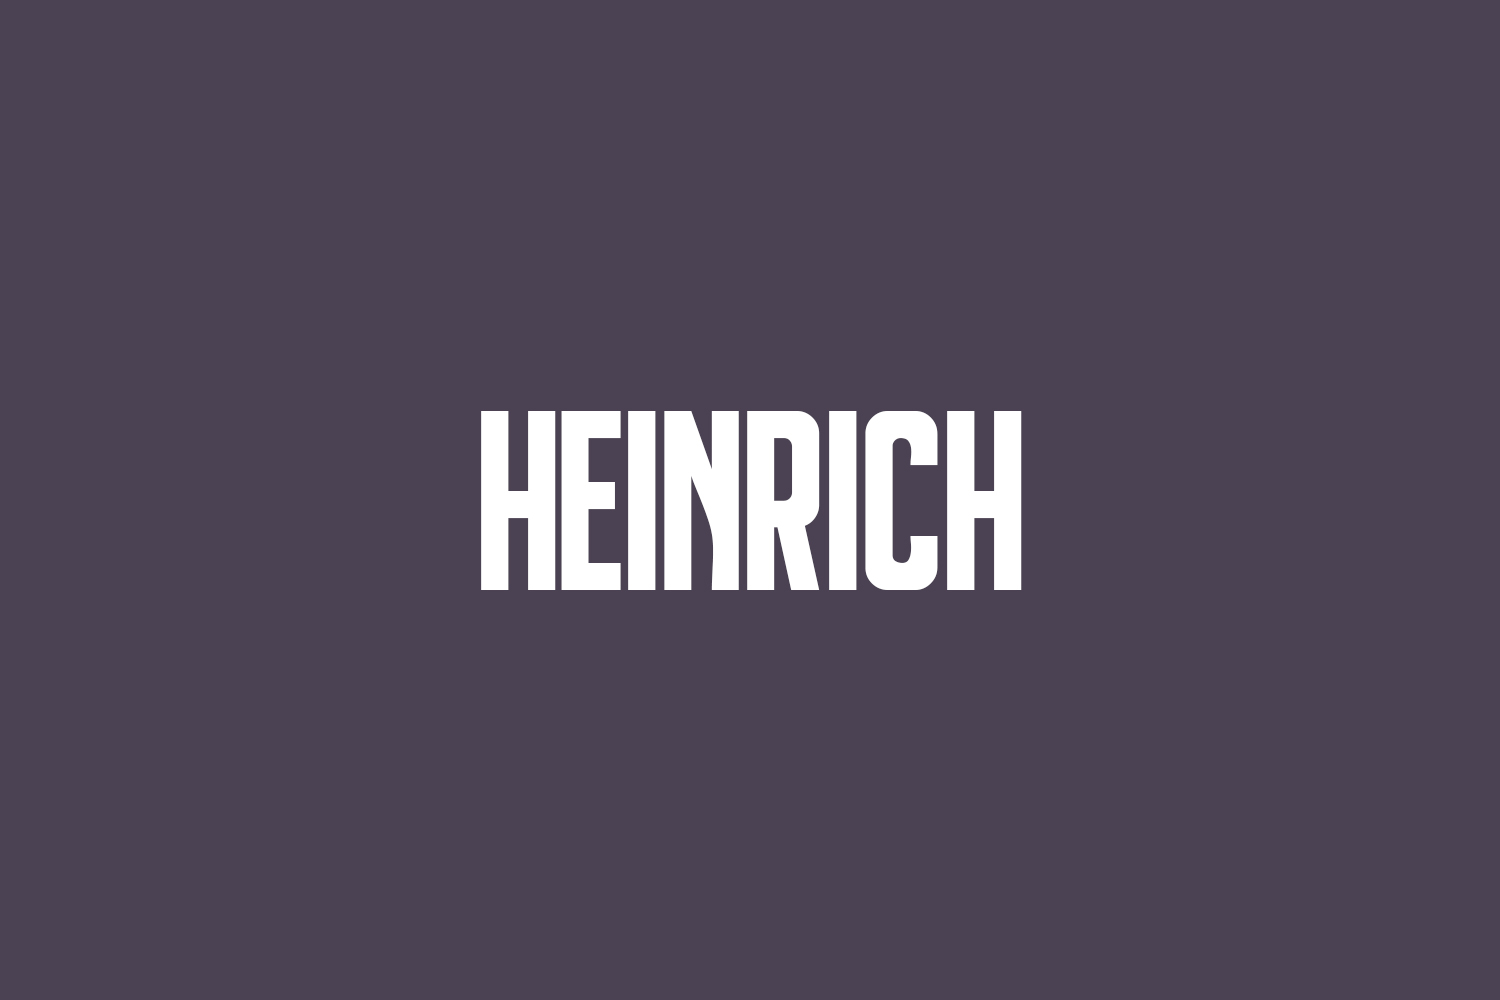 Heinrich Free Font